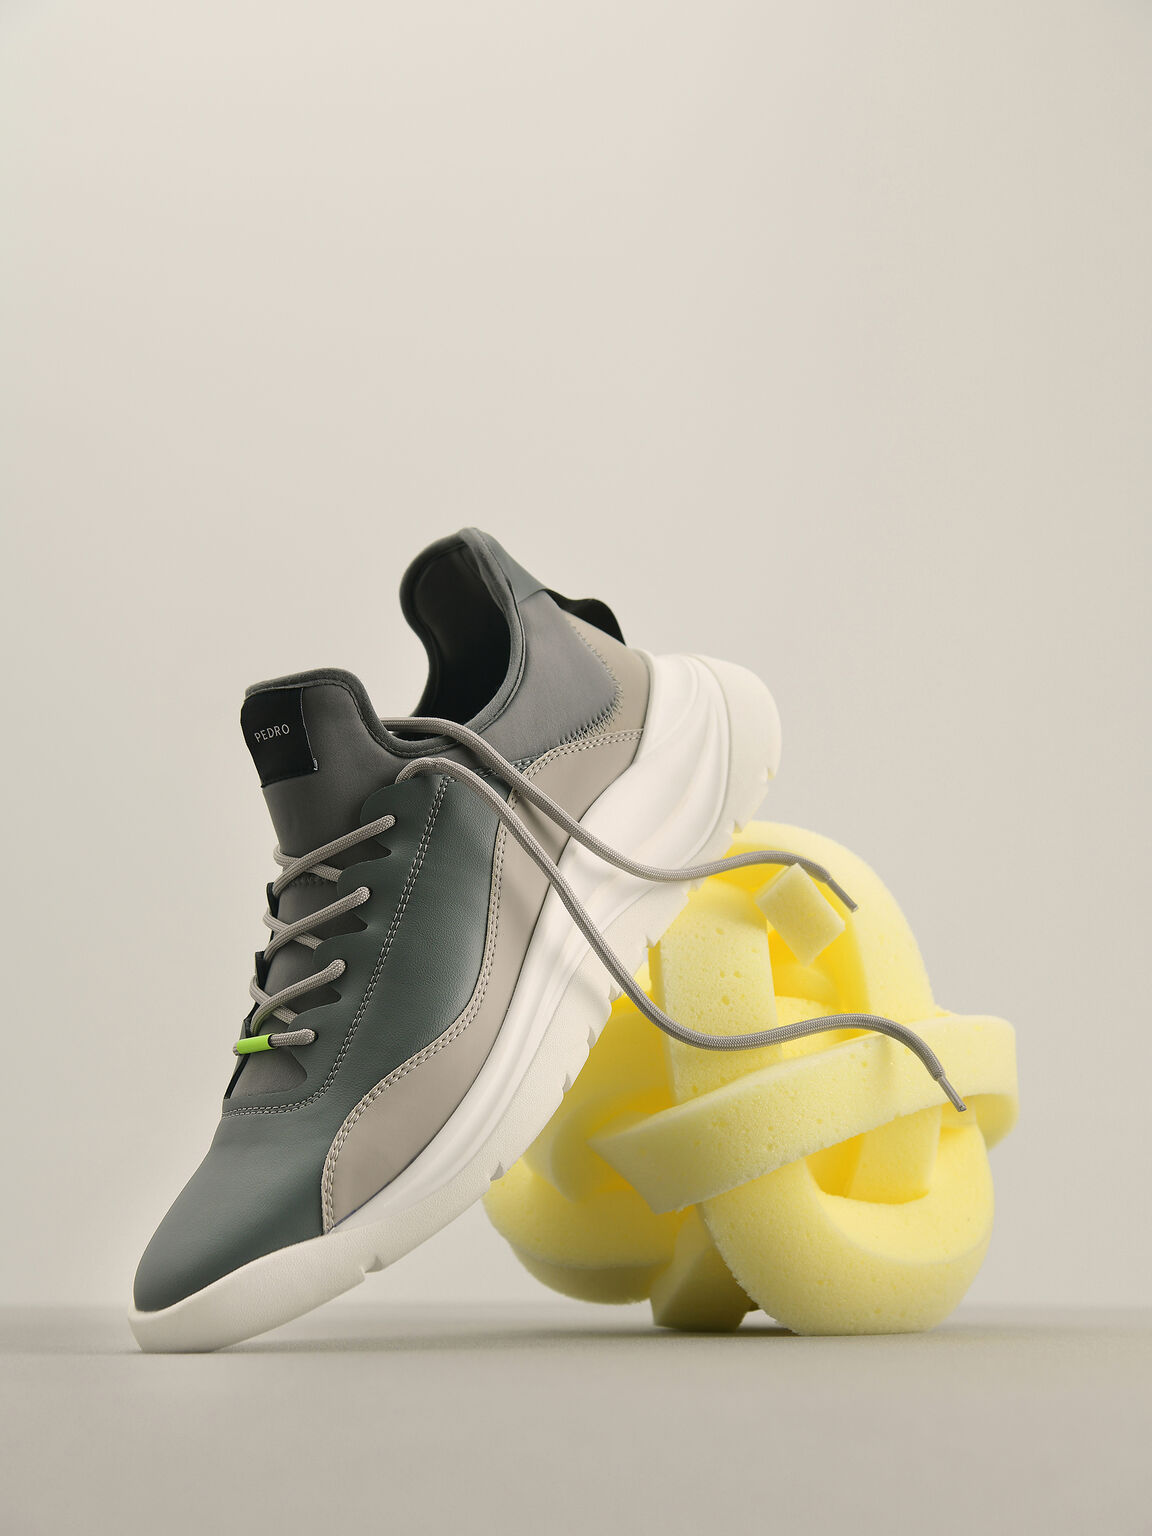 Dayflux Sneakers, Dark Grey